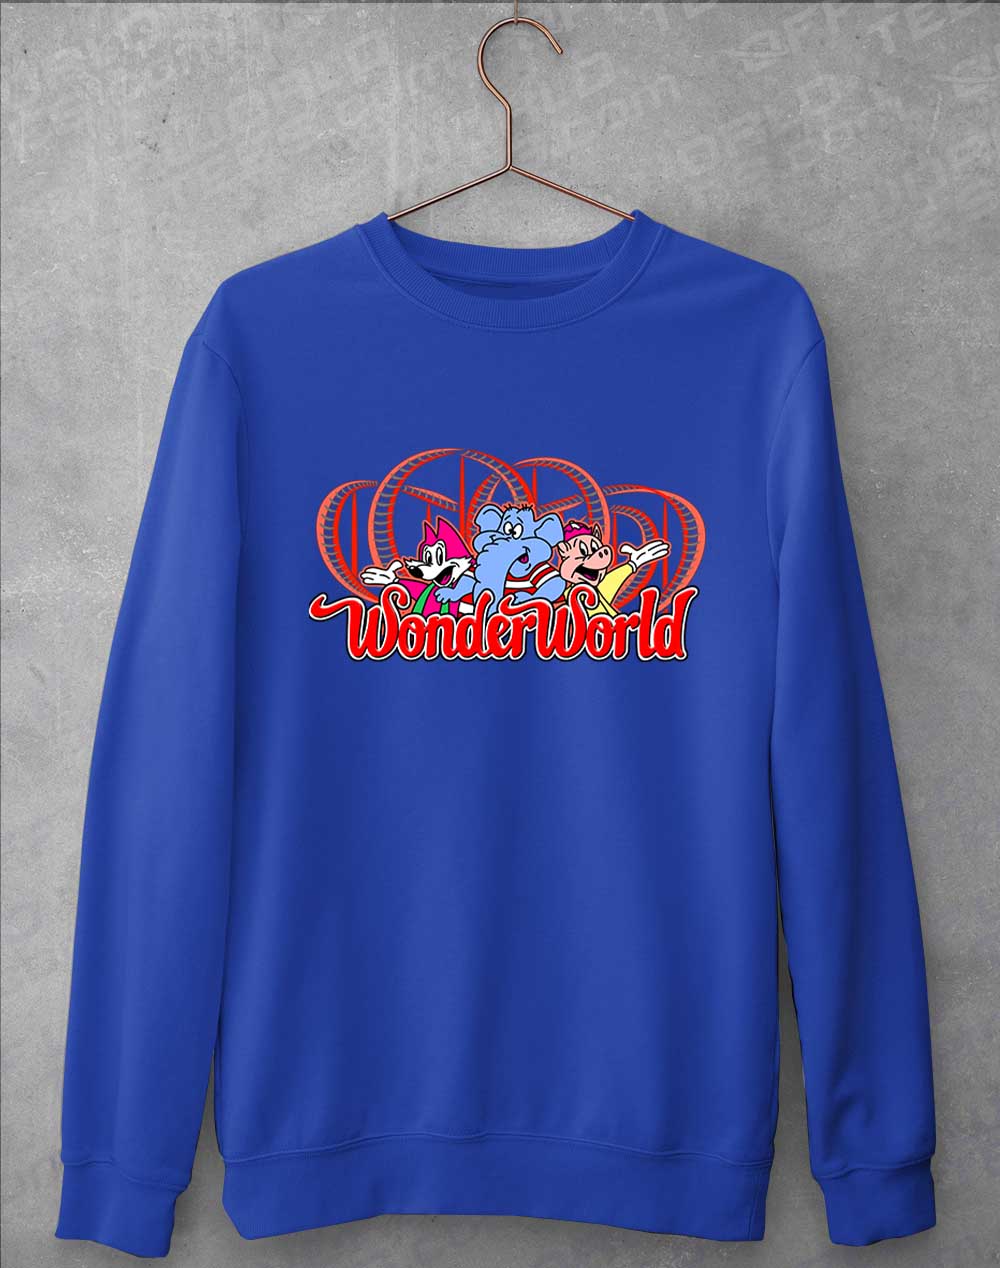 Royal Blue - WonderWorld Sweatshirt